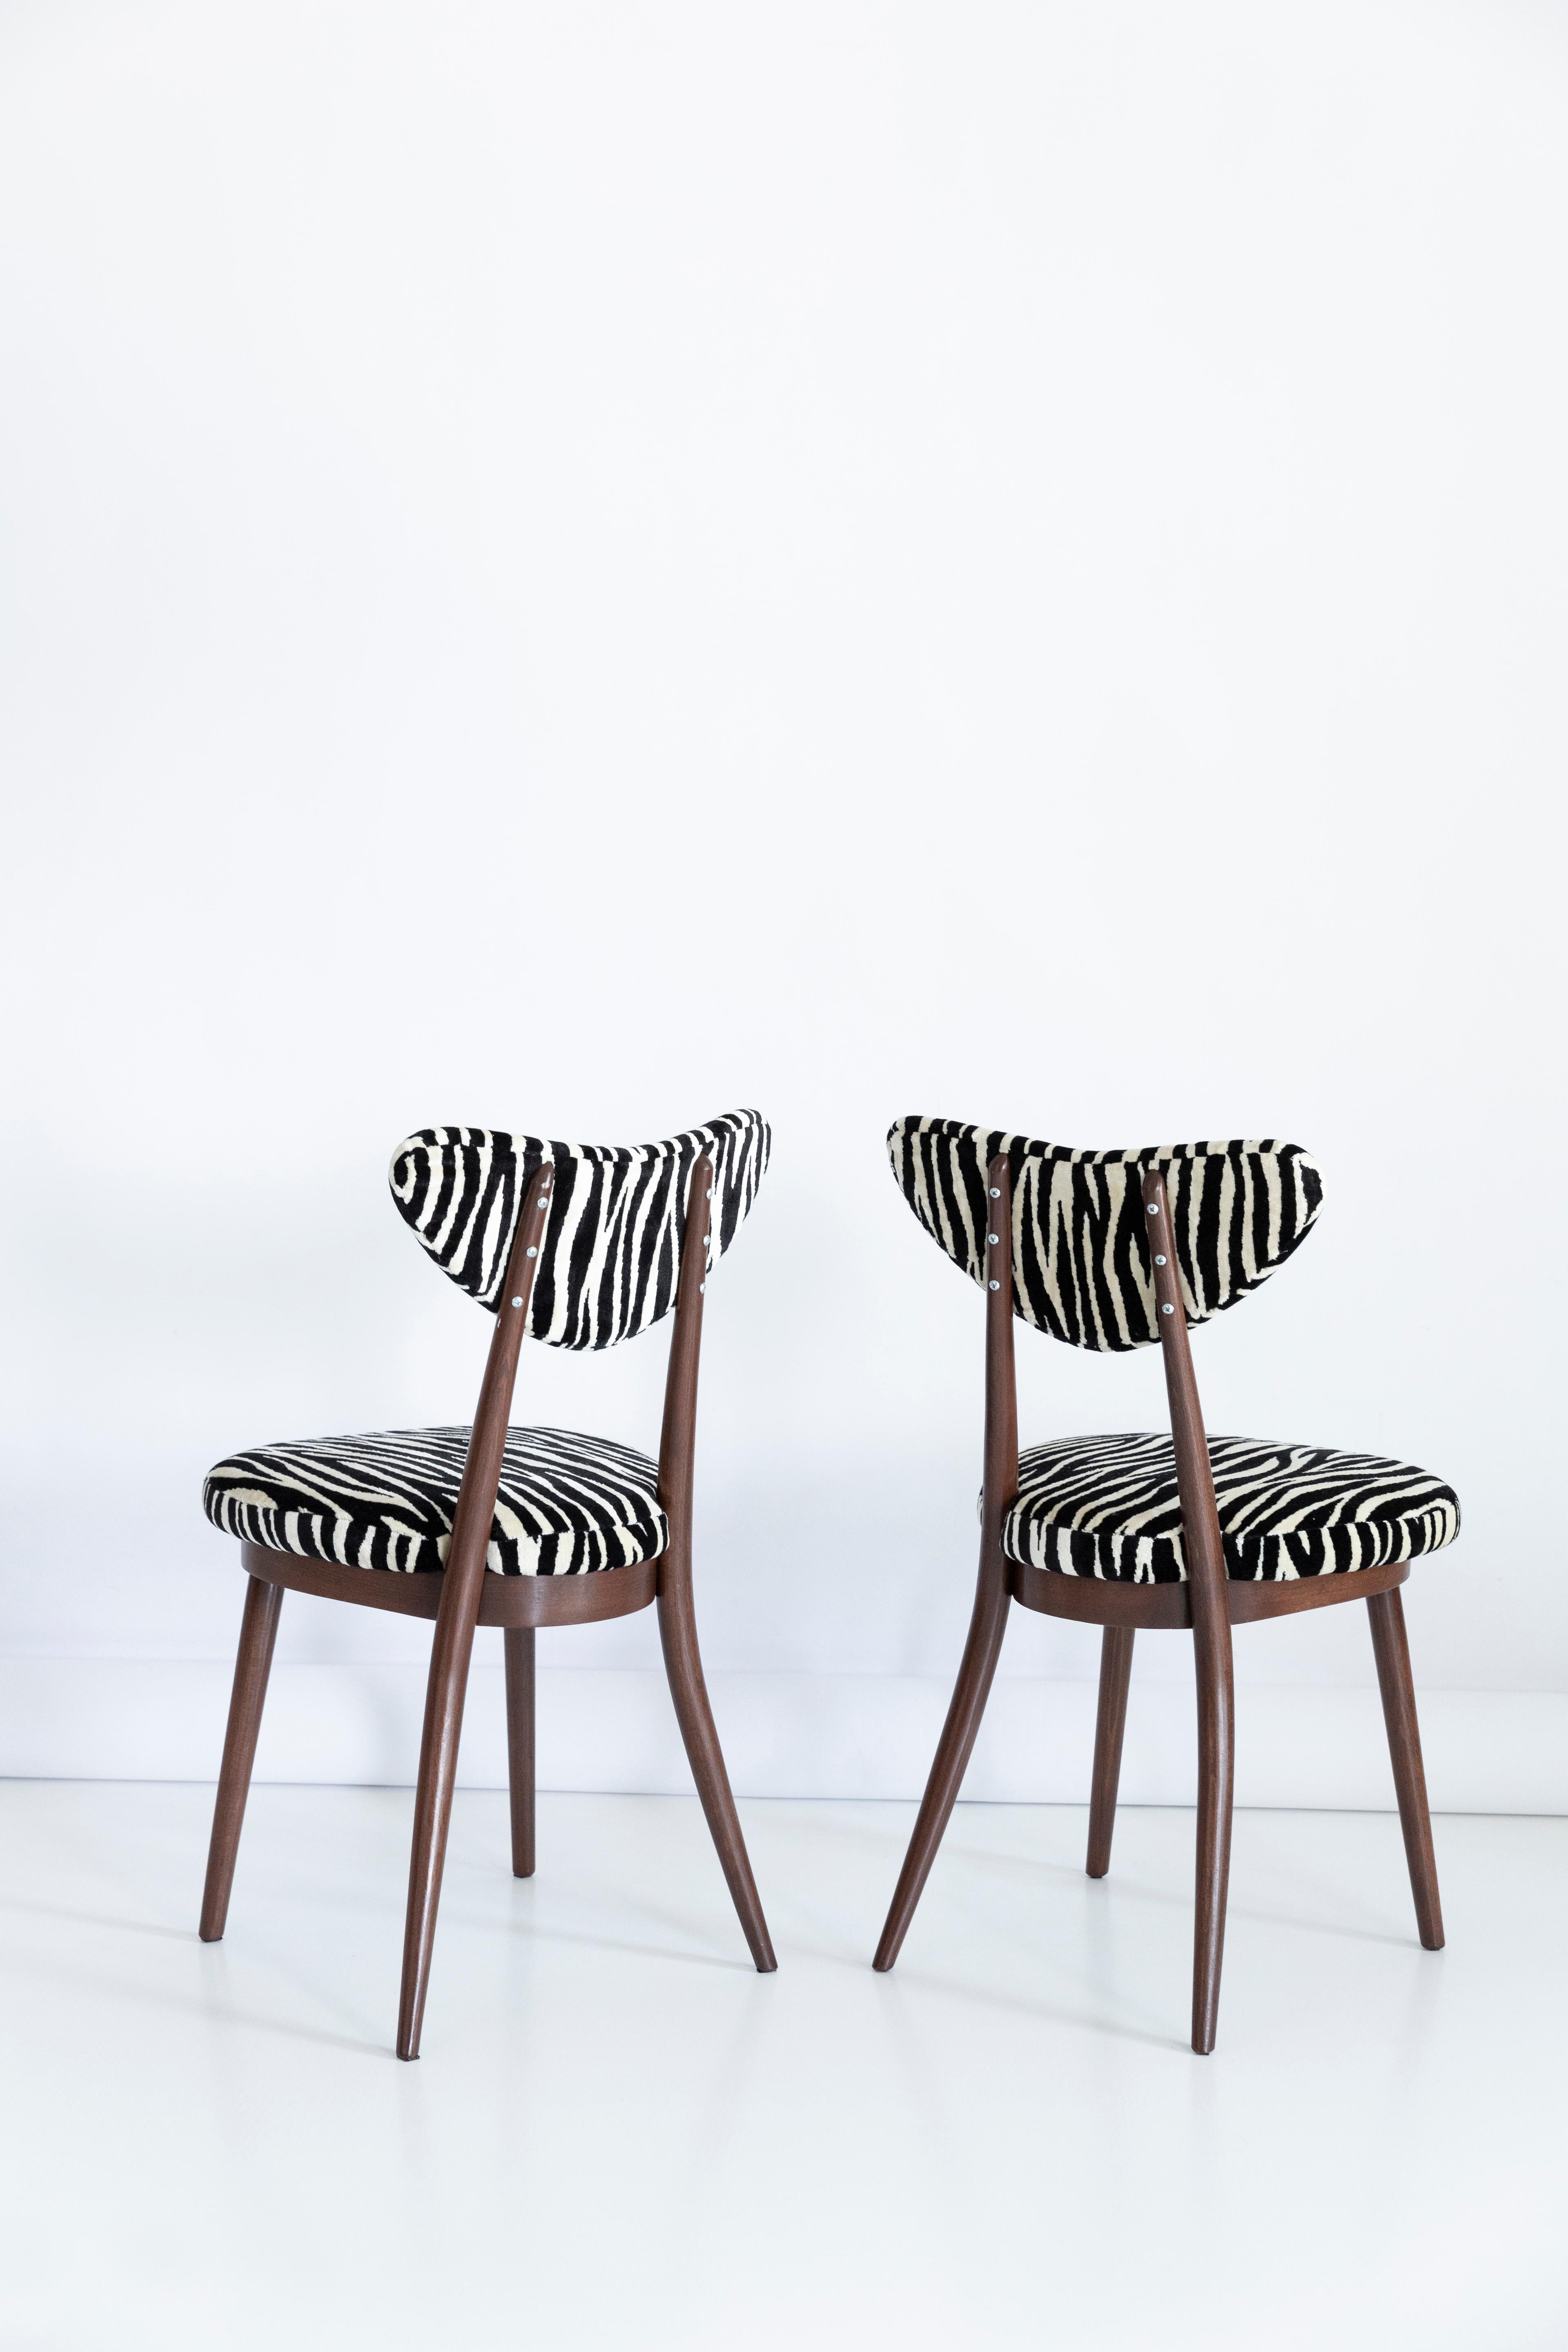 Six Midcentury Zebra Black White Heart Chairs, Hollywood Regency, Poland, 1960s For Sale 1